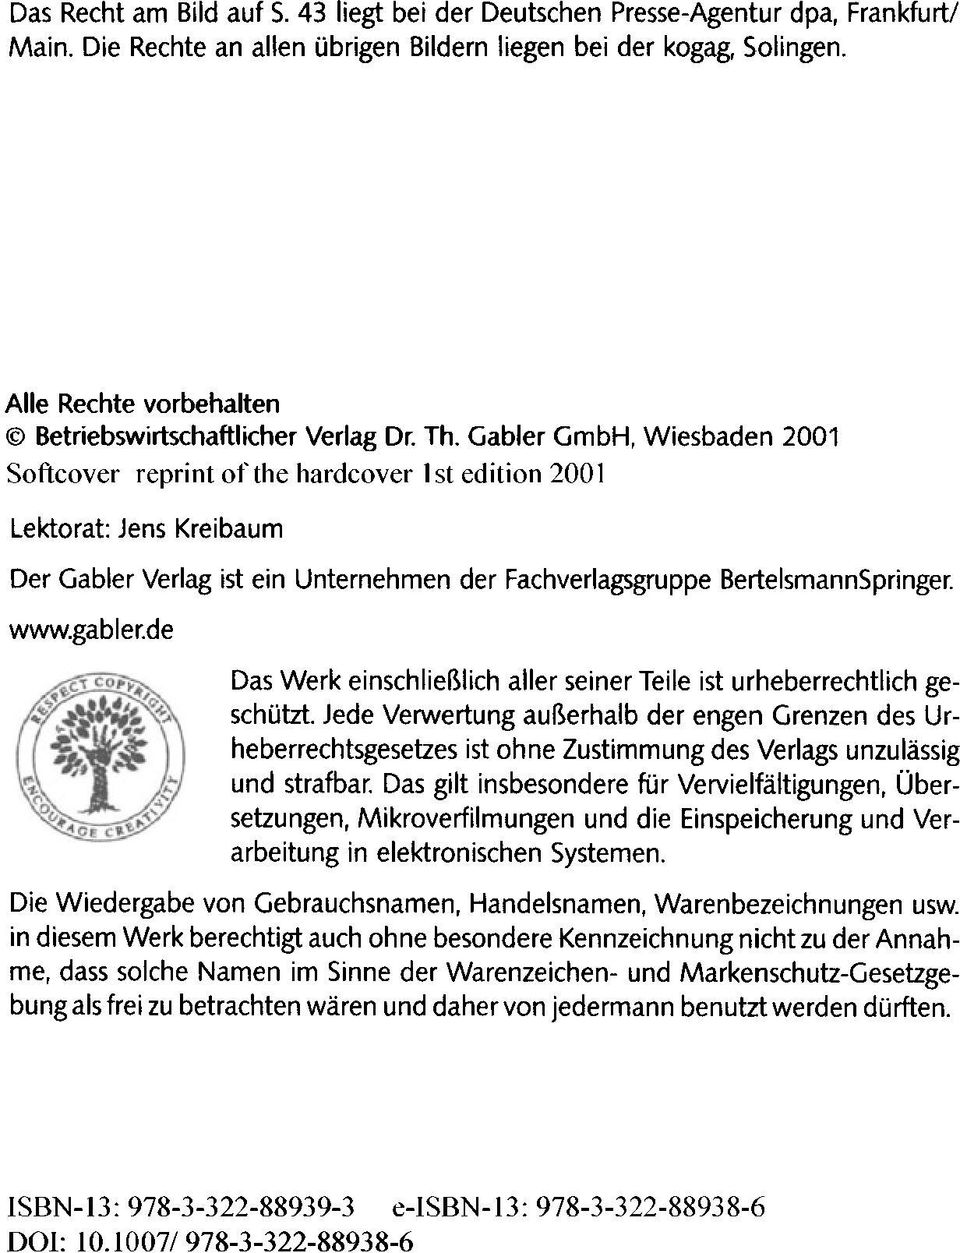 Gabler GmbH, Wiesbaden 2001 Softcover reprint of the hardcover 15t edition 2001 Lektorat: Jens Kreibaum Der Gabler Verlag ist ein Unternehmen der Fachverlagsgruppe BertelsmannSpringer. www.gabler.